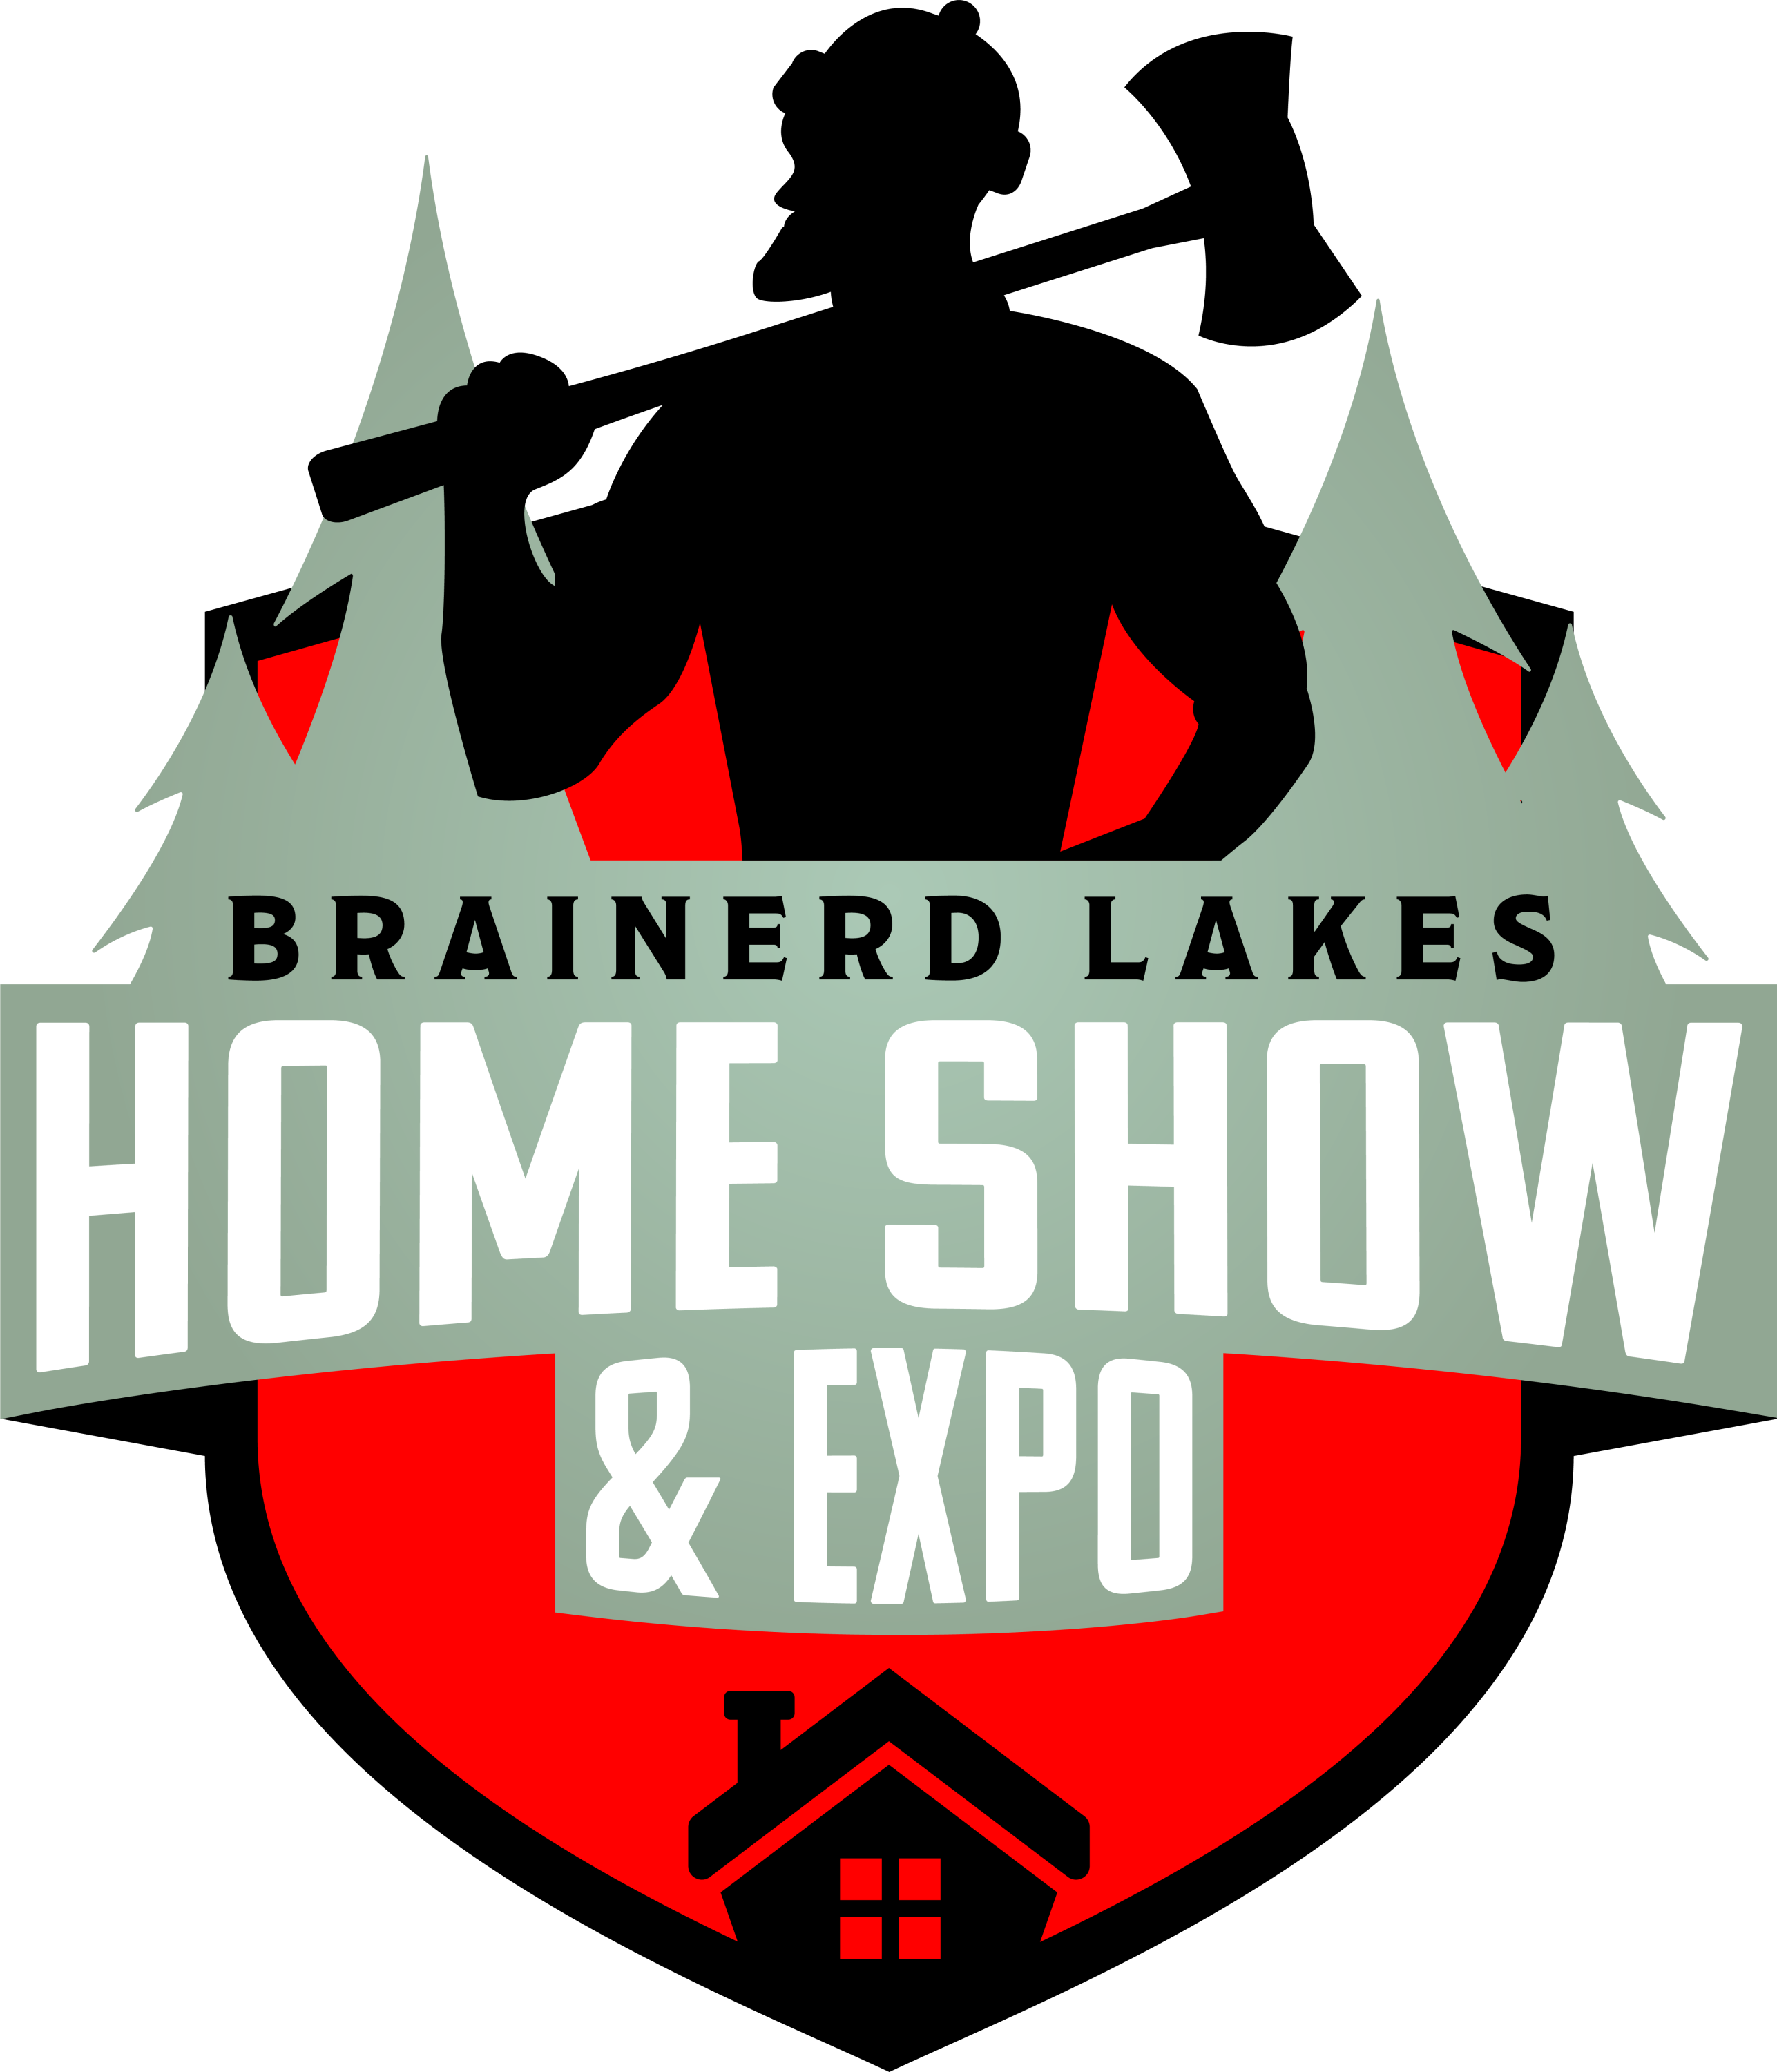 Brainerd Lakes Home Show & Expo - Event Registration